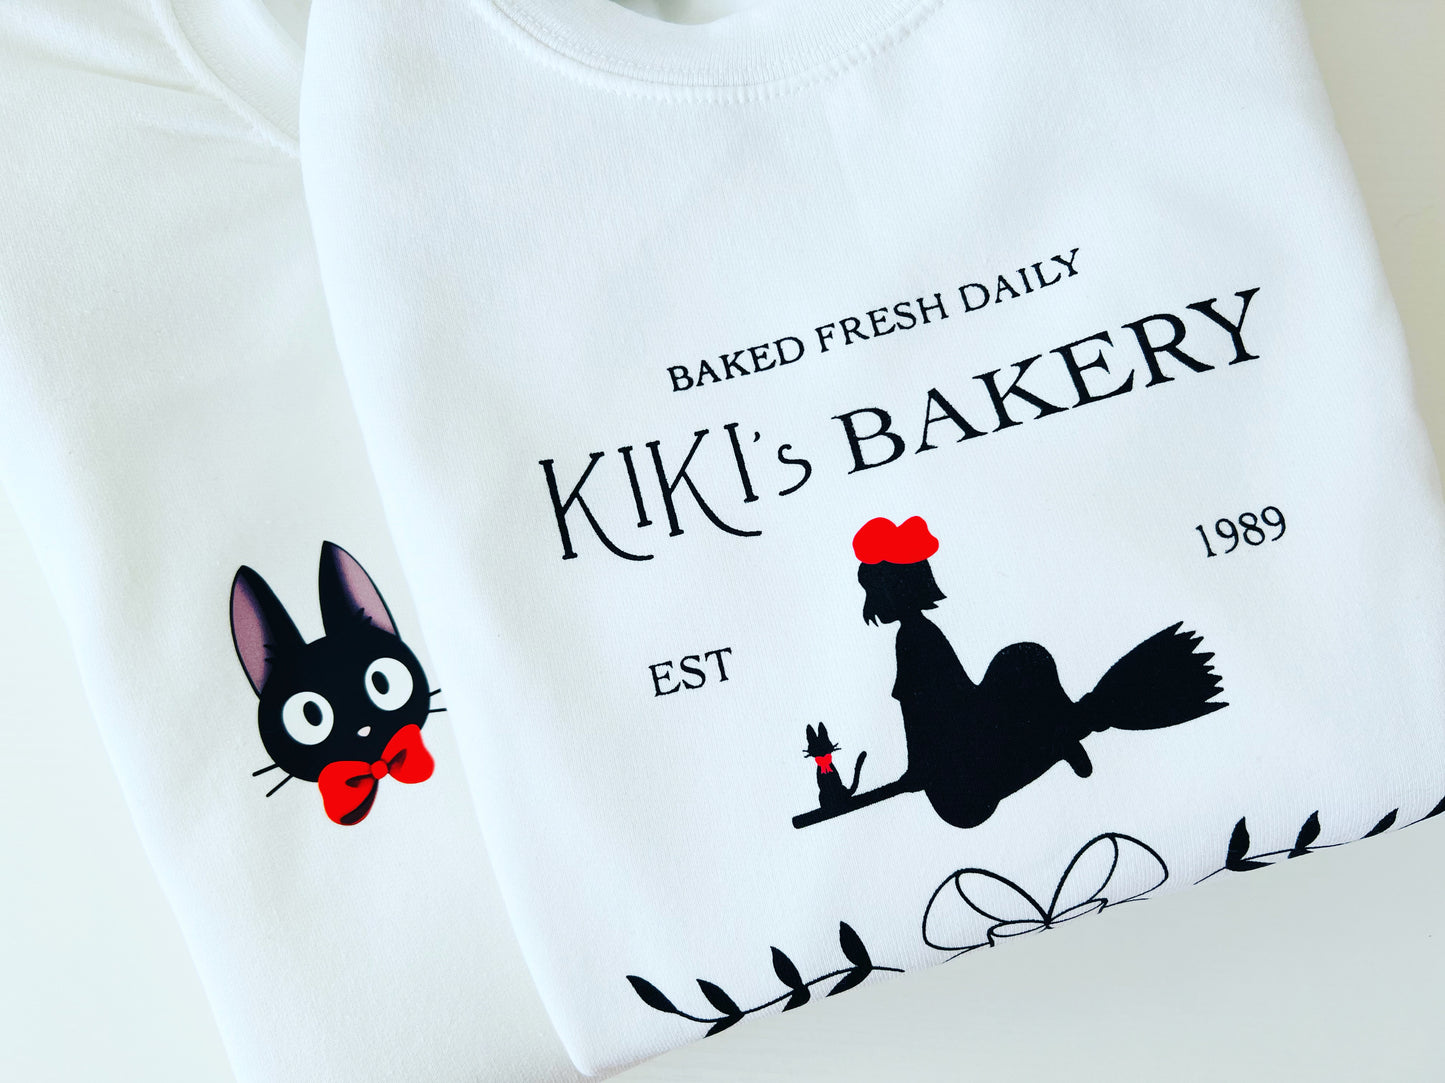 Kiki’s Bakery Sweatshirt